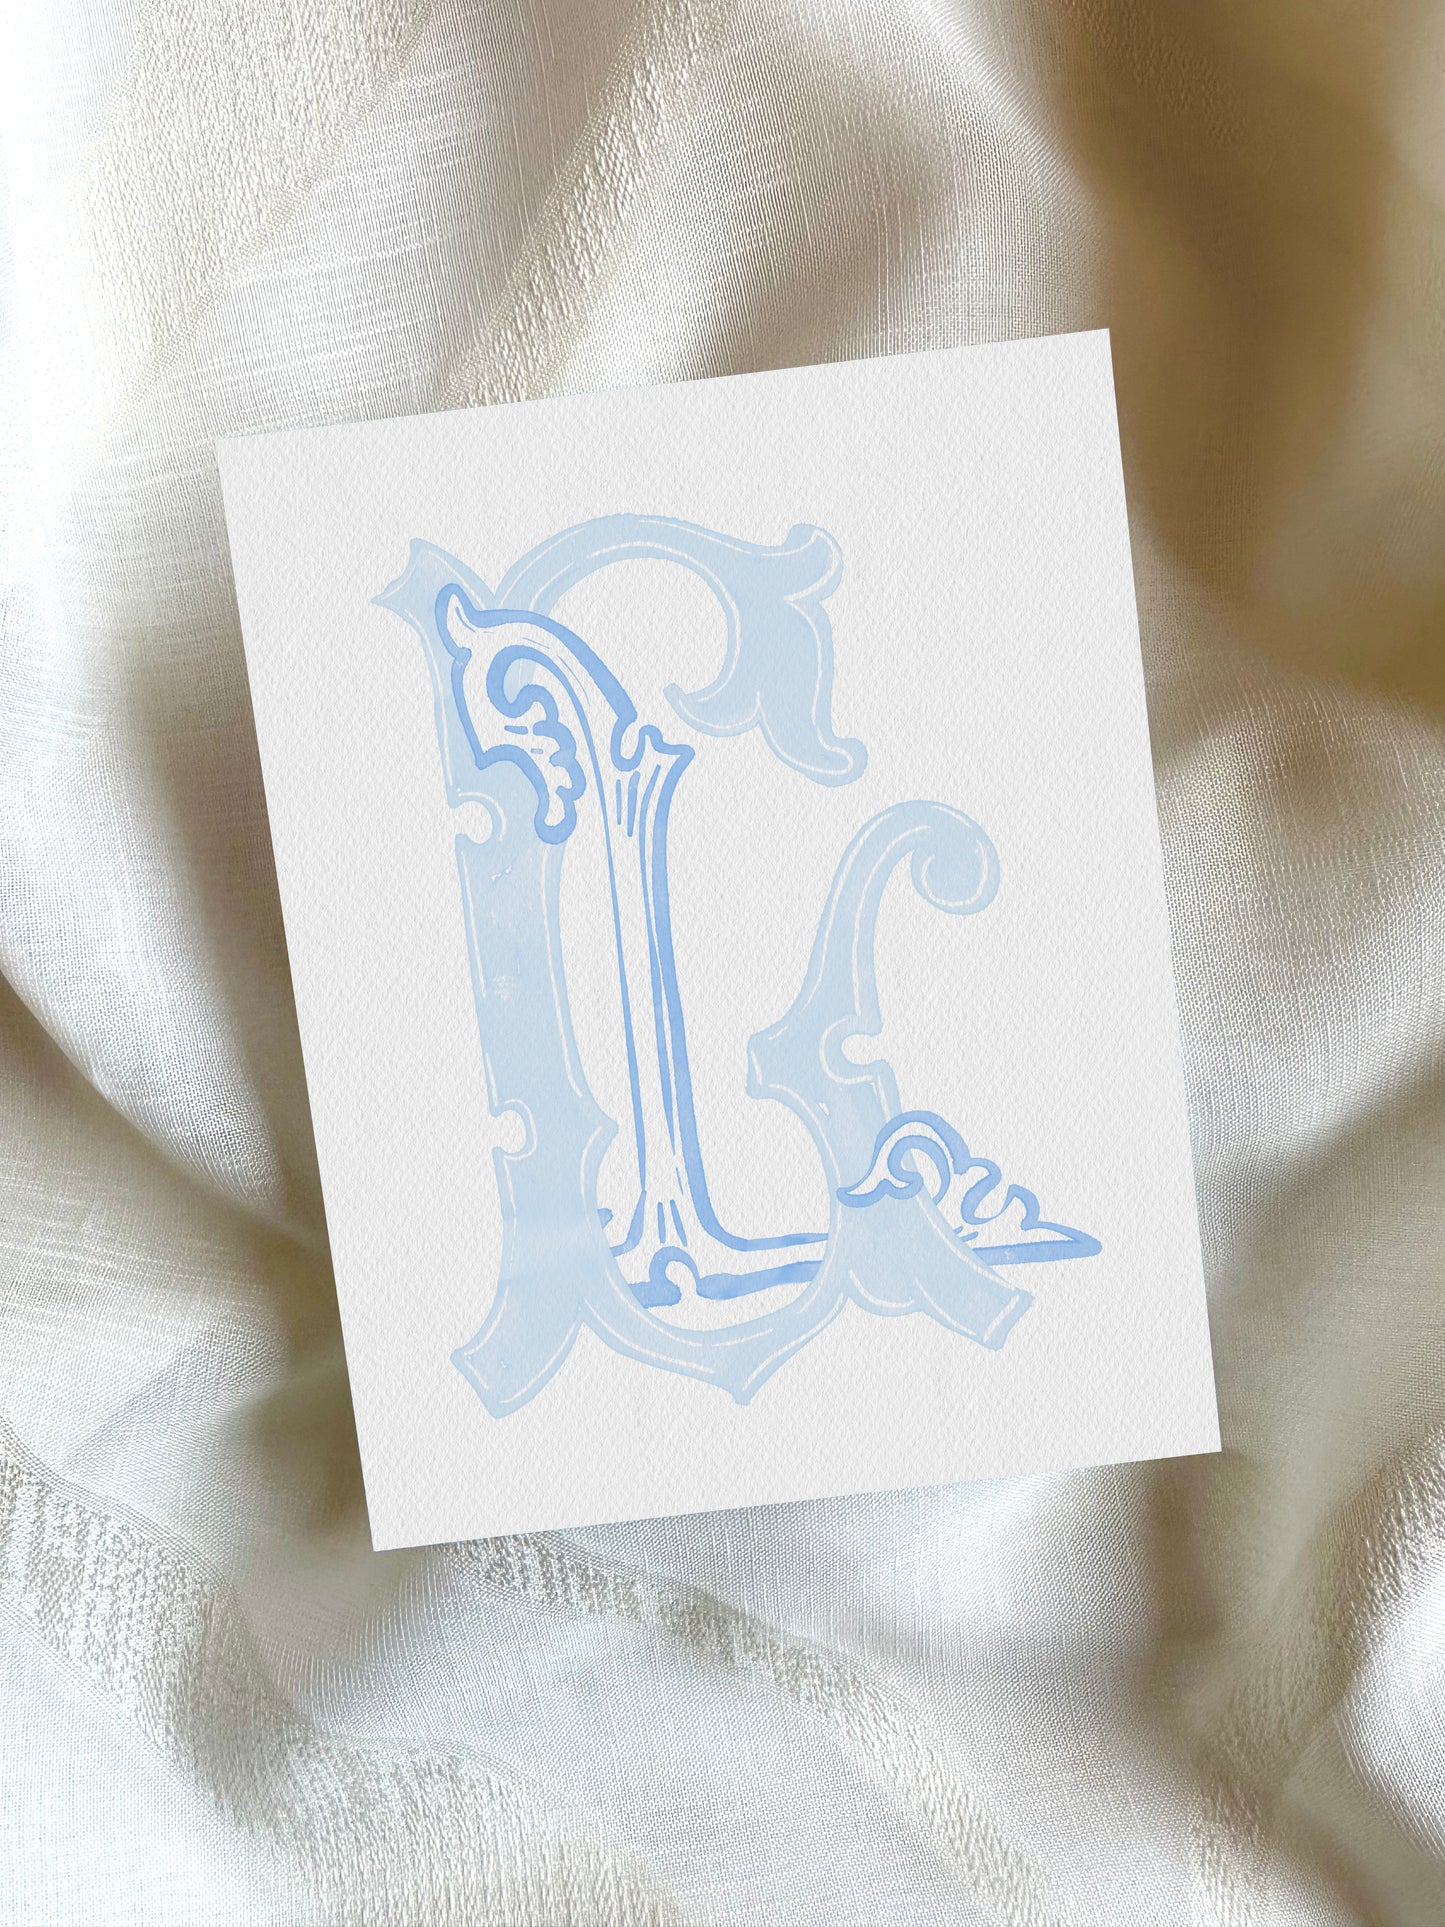 2 Letter Monogram with Letters GL LG | Digital Download - Wedding Monogram SVG, Personal Logo, Wedding Logo for Wedding Invitations The Wedding Crest Lab